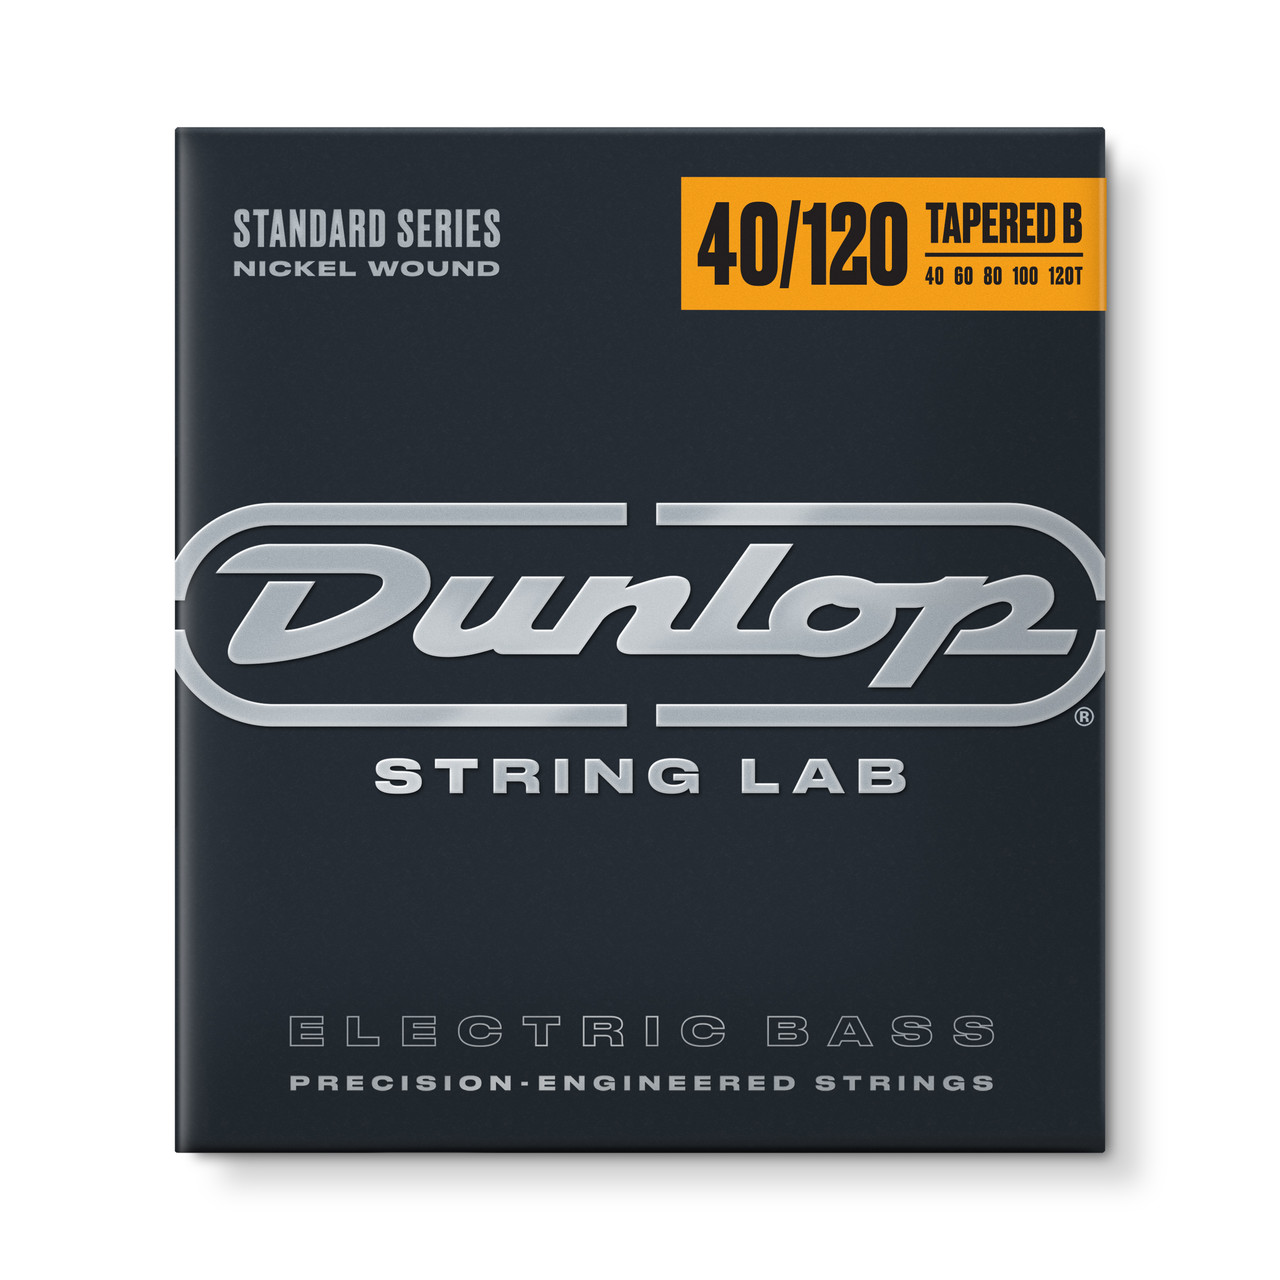 STANDARD SERIES NICKEL WOUND TAPERED BASS STRINGS 40-120 | 5-STRING - Dunlop